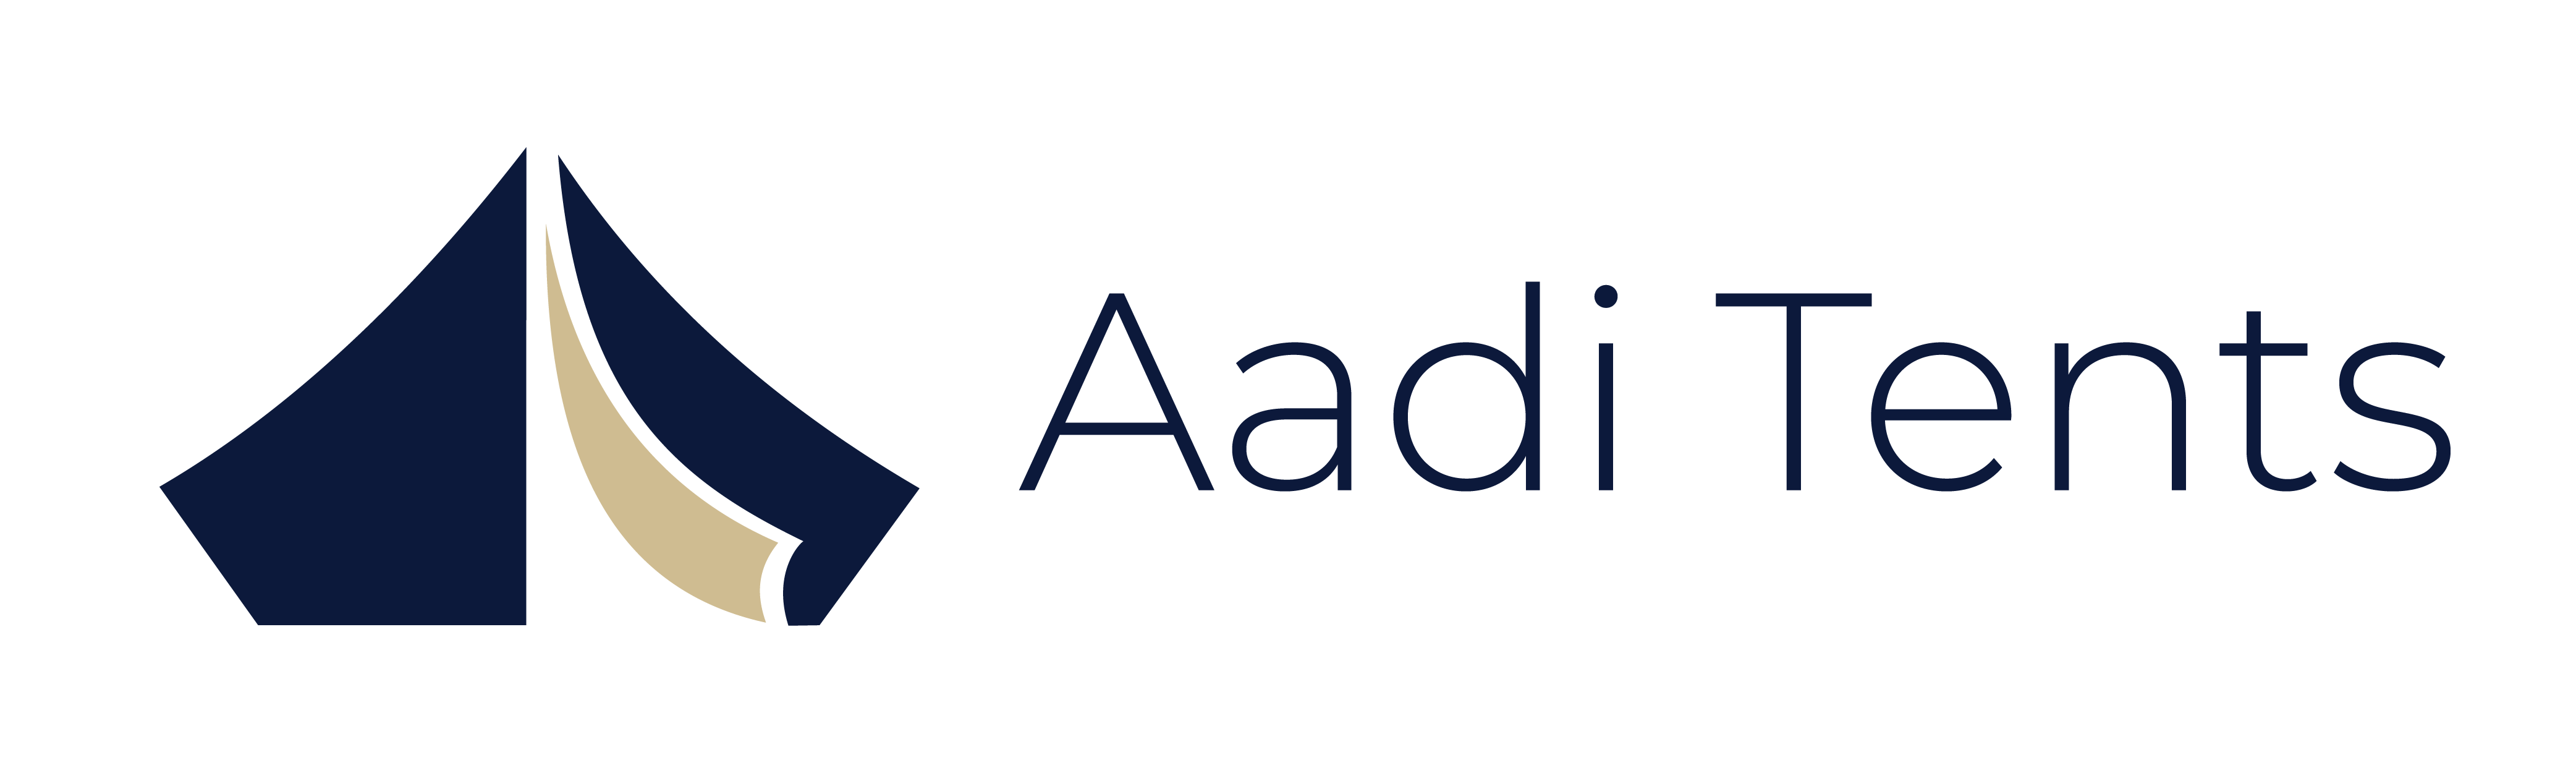 ADAI Logo NEW V2-2 2021-2 - UW Research